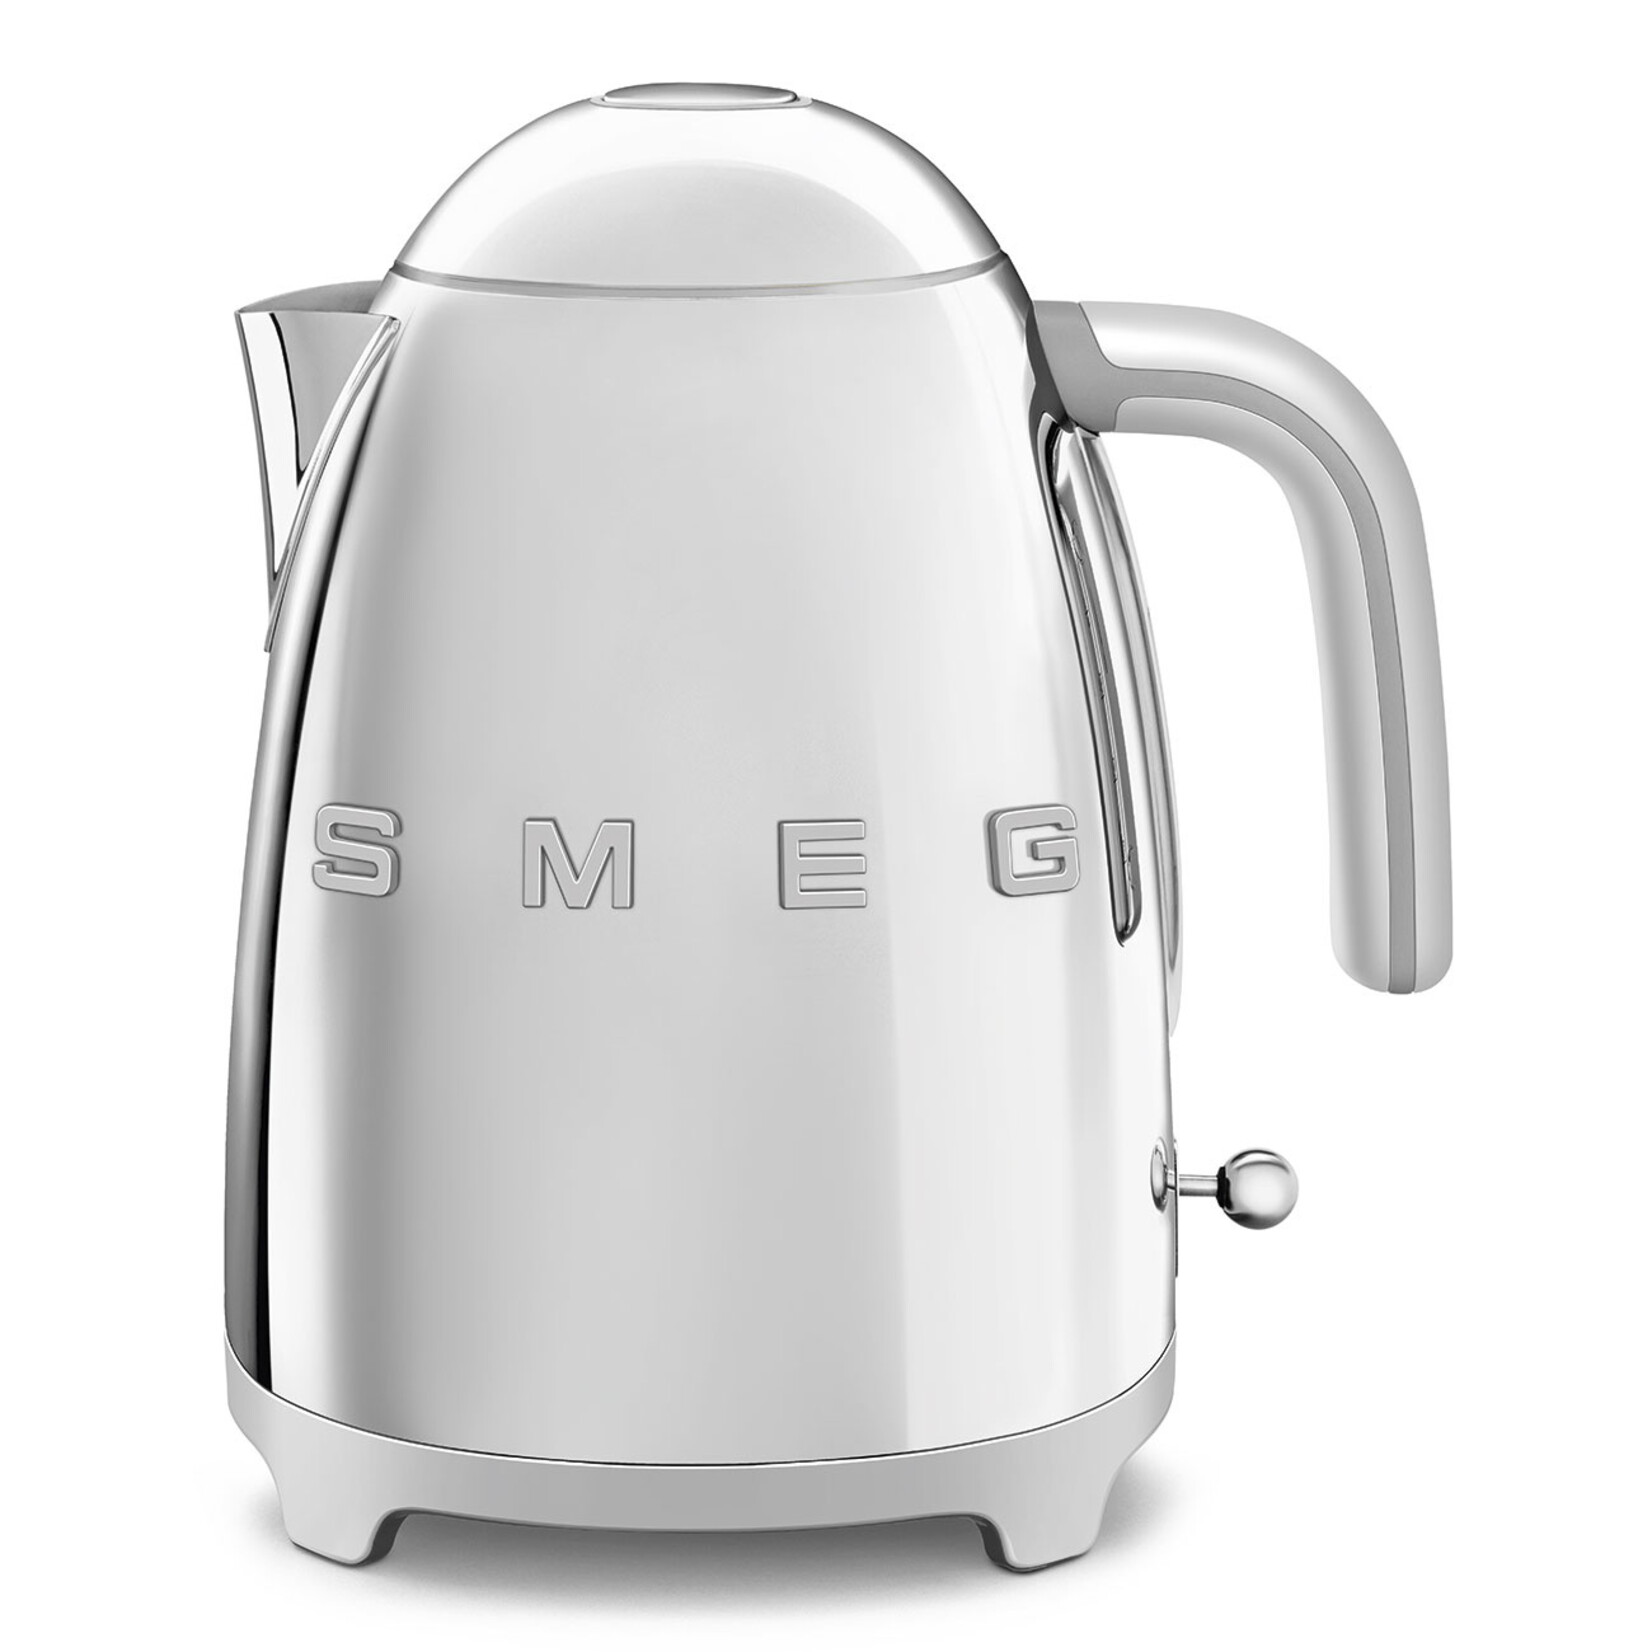 https://cdn.shoplightspeed.com/shops/659299/files/51862635/1652x1652x2/smeg-50s-retro-style-aesthetic-7-cup-kettle.jpg